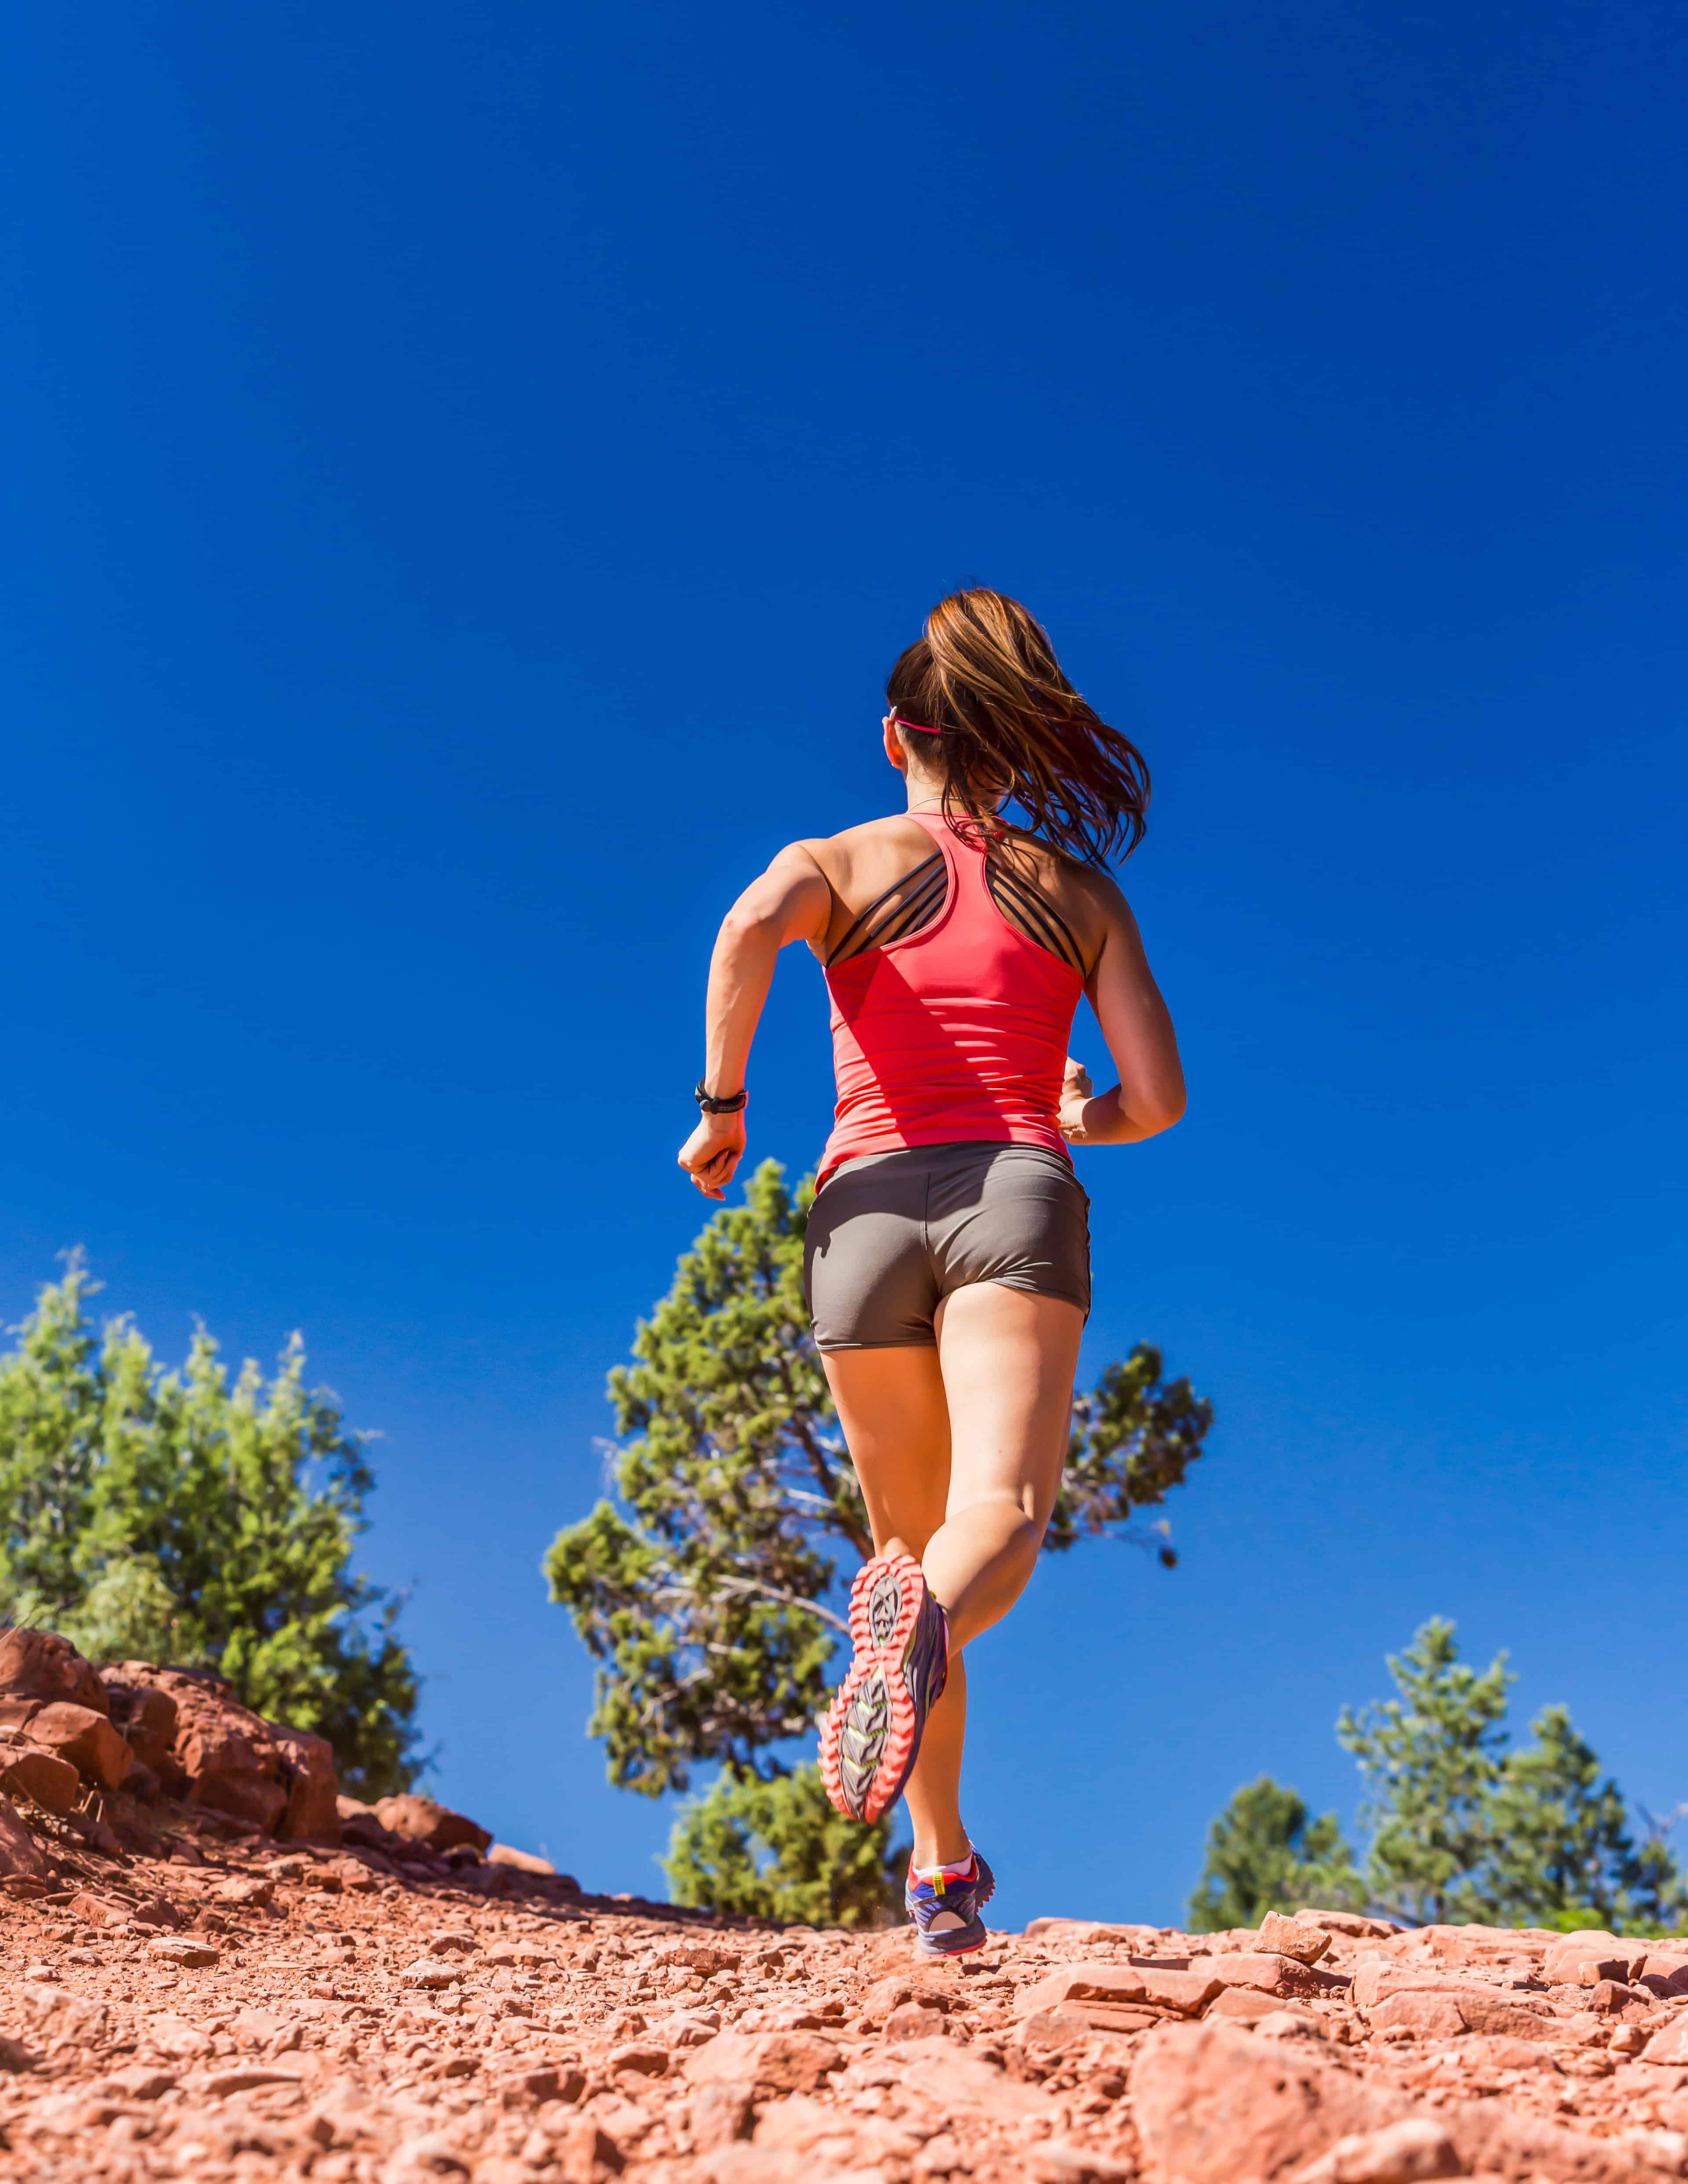 Tucson-Woman-Running